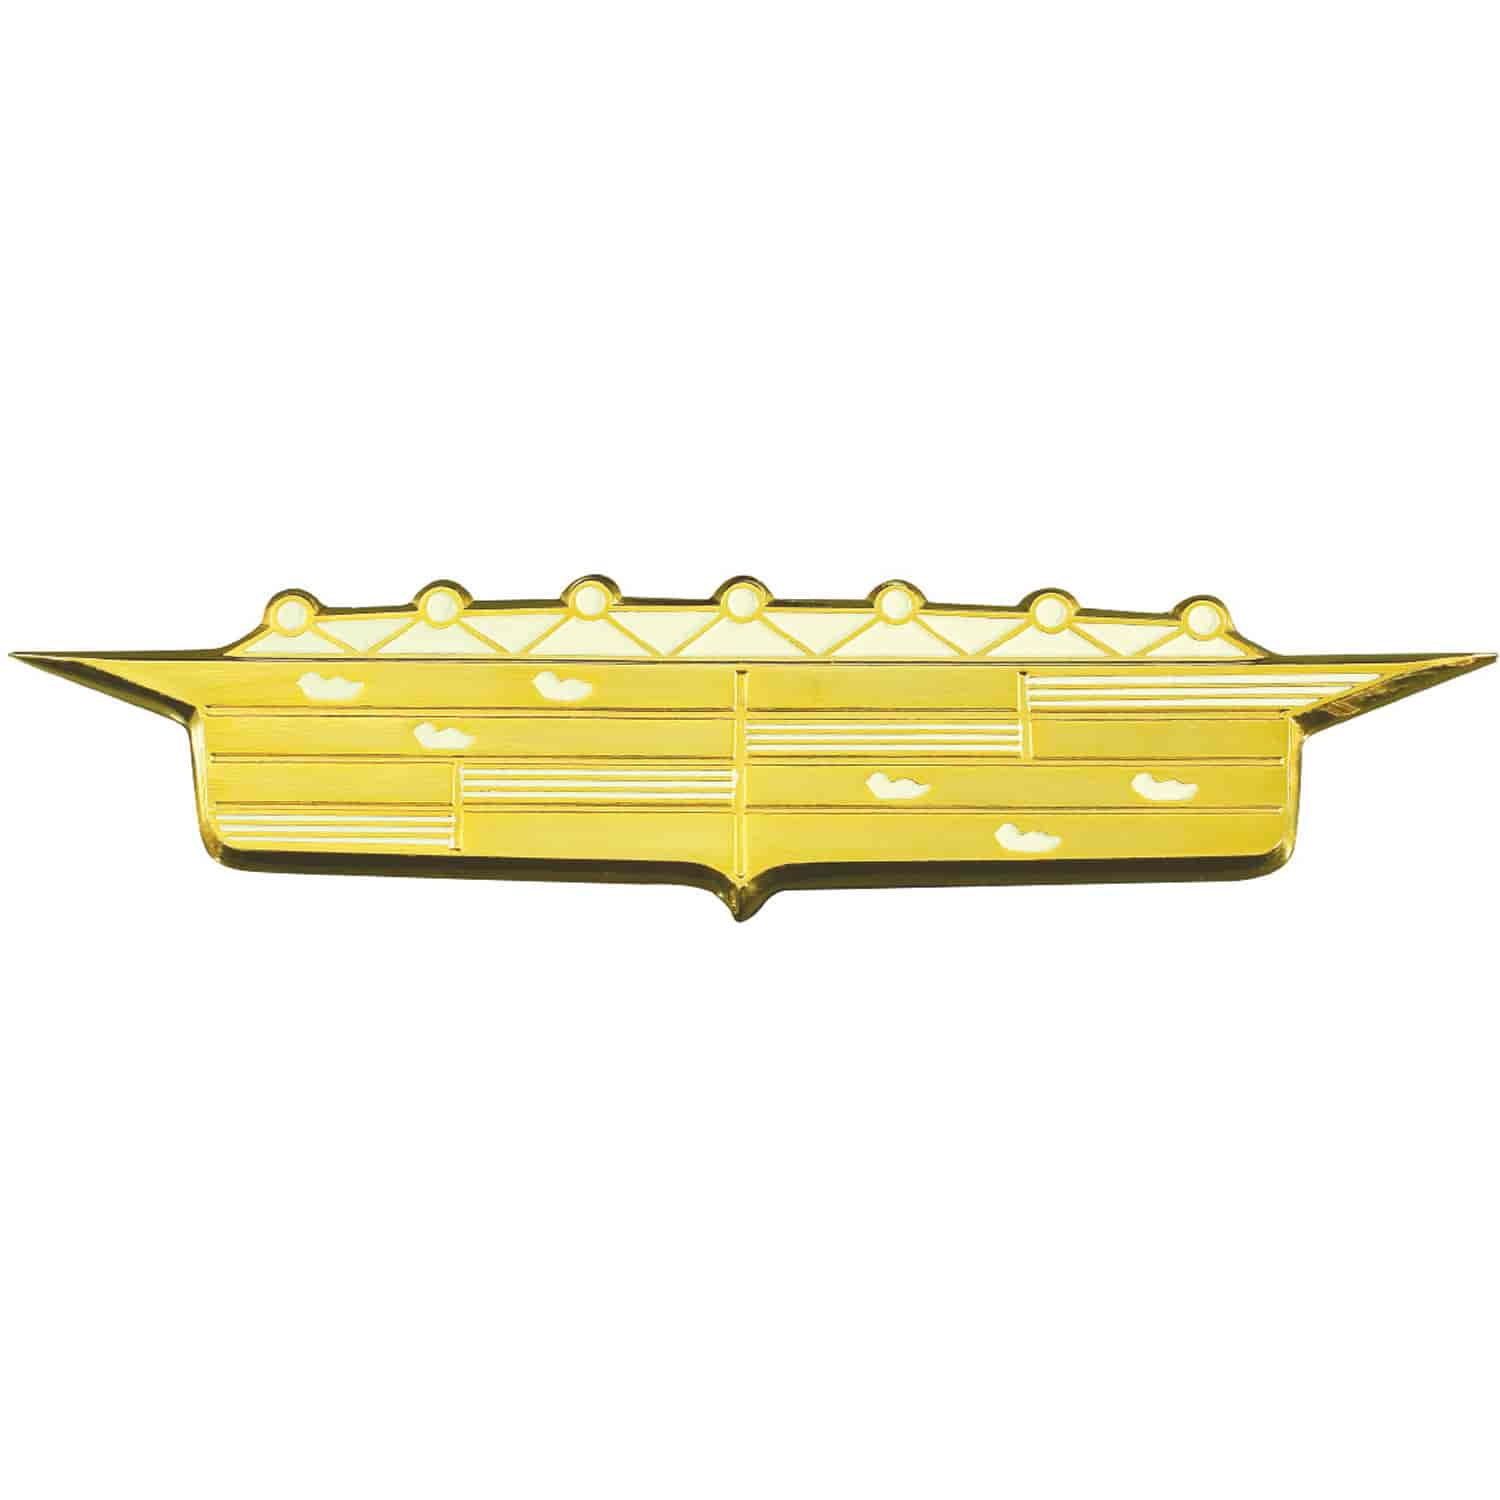 Emblem Fender 1956 Cadillac Crest